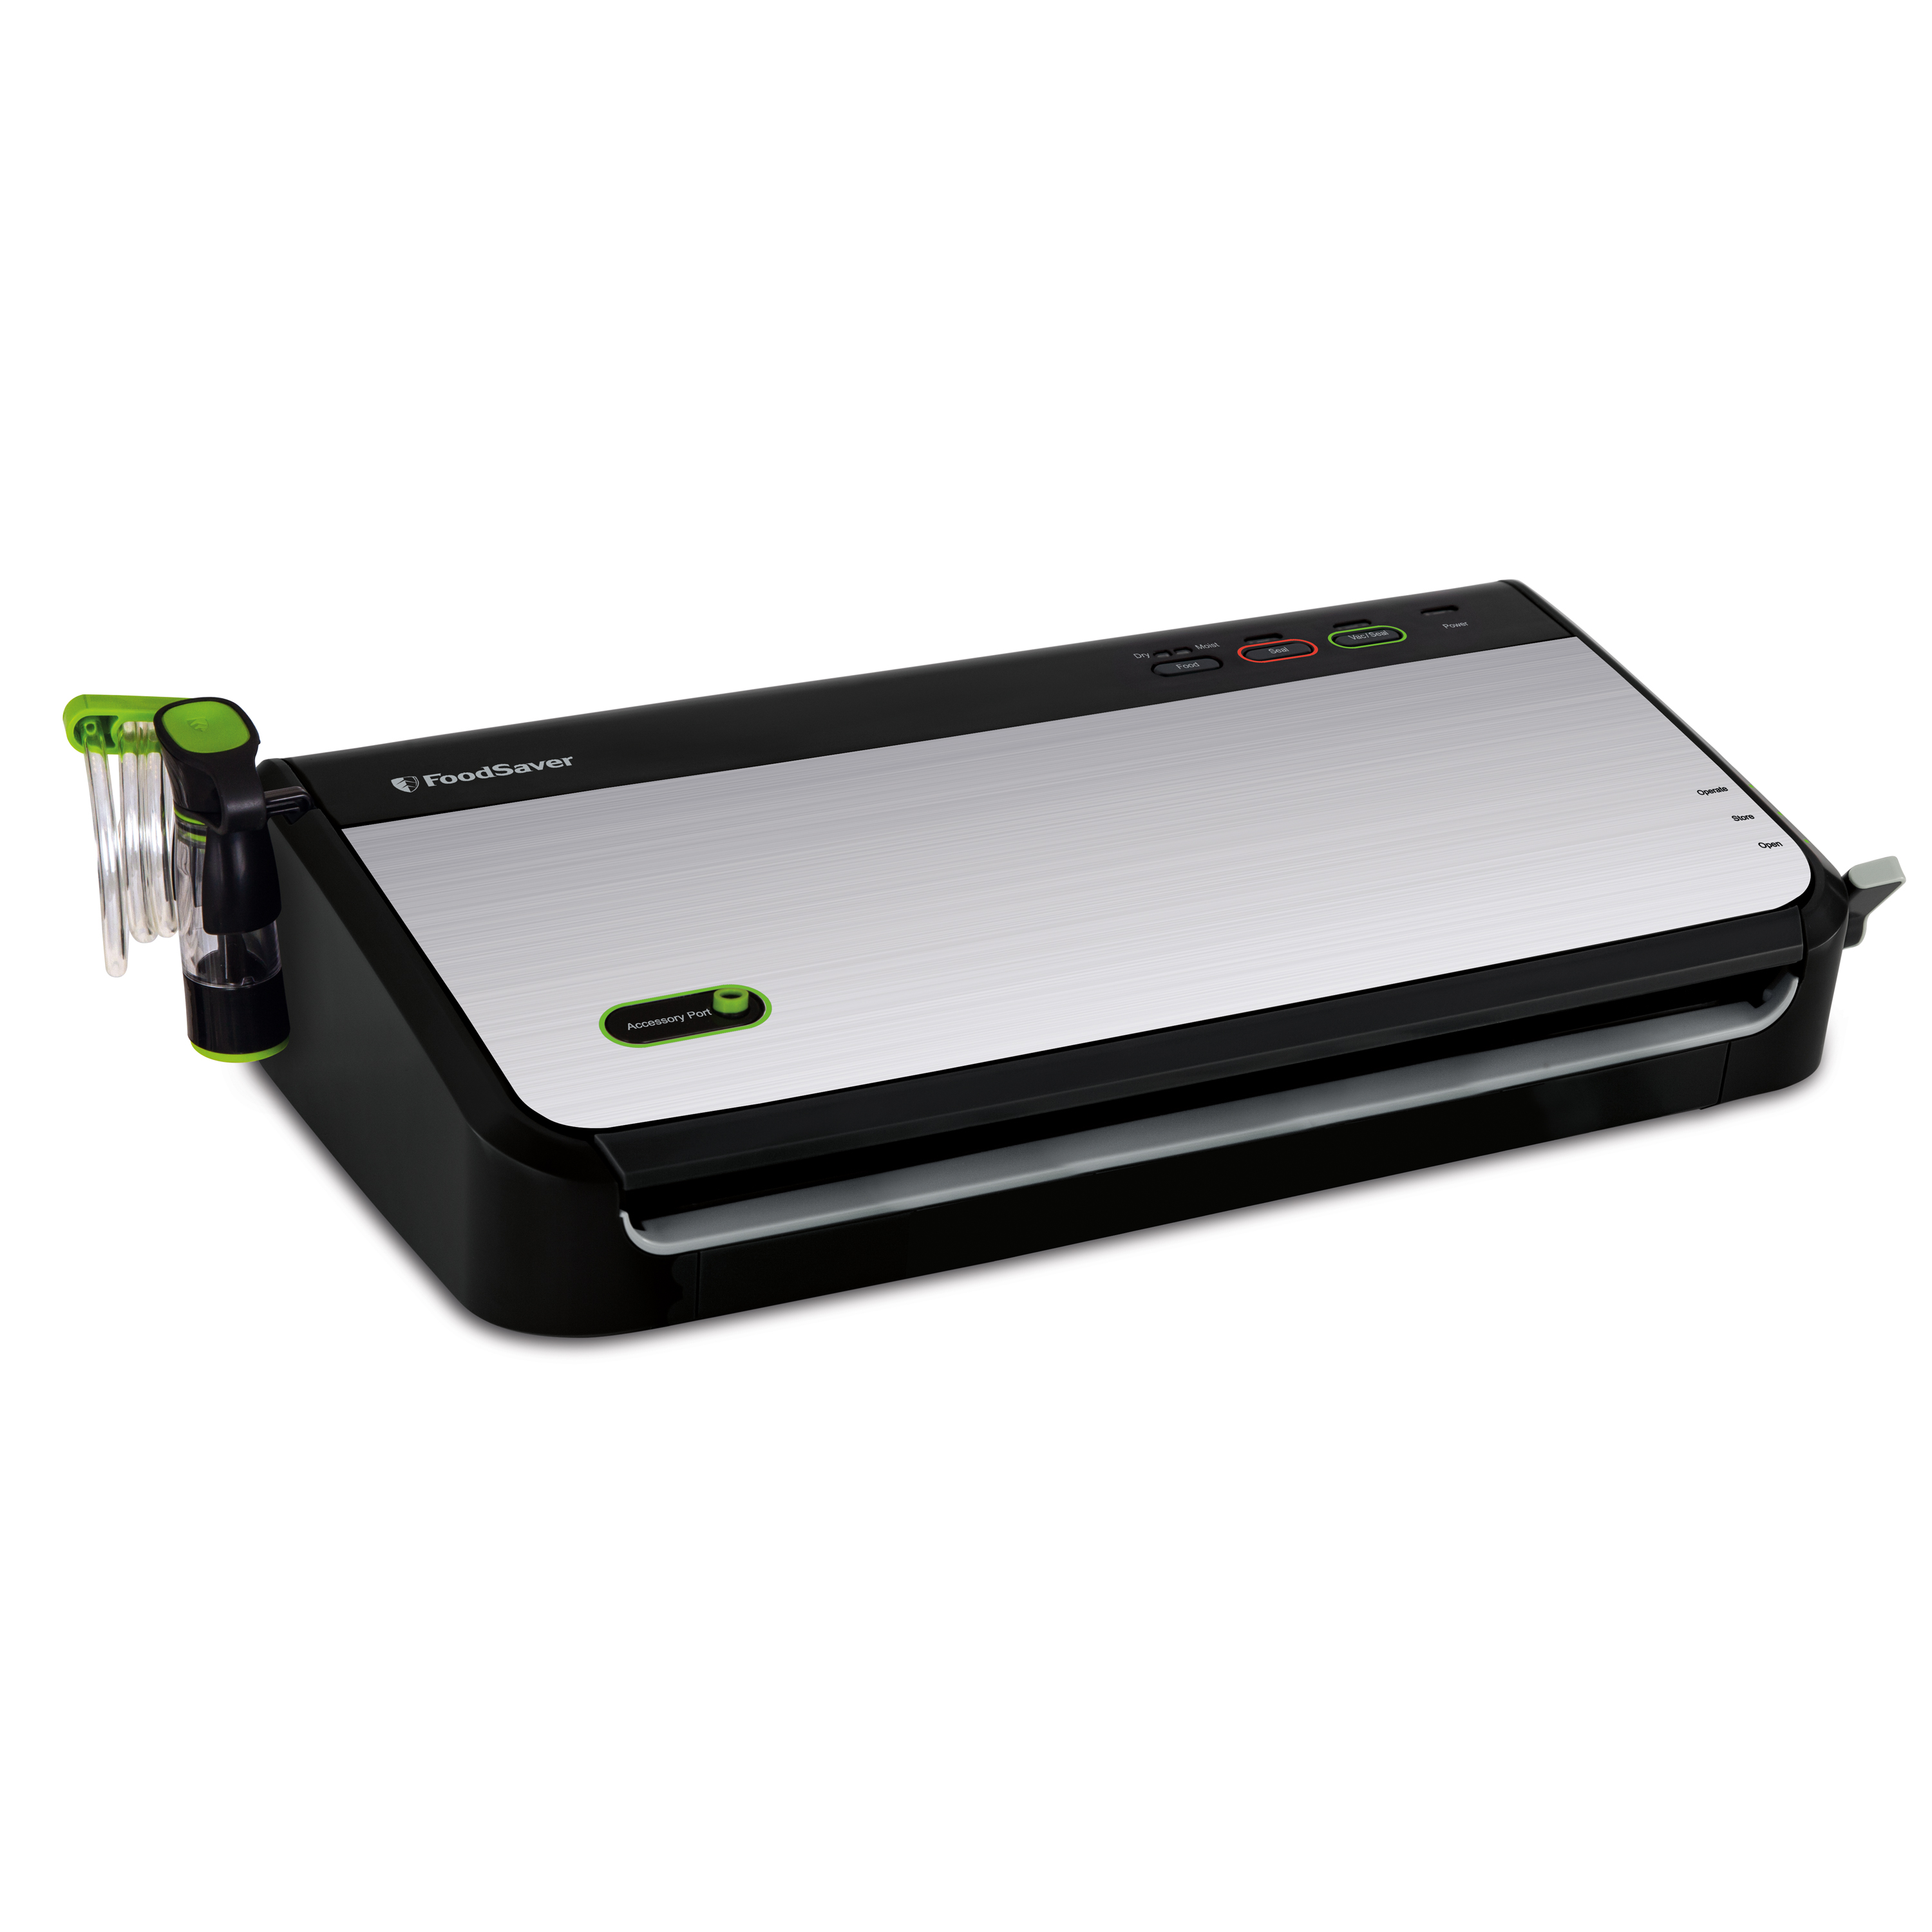 FoodSaver® FM2435 Vacuum Sealing System with Bonus Handheld Sealer & Starter Kit, Silver - image 4 of 8